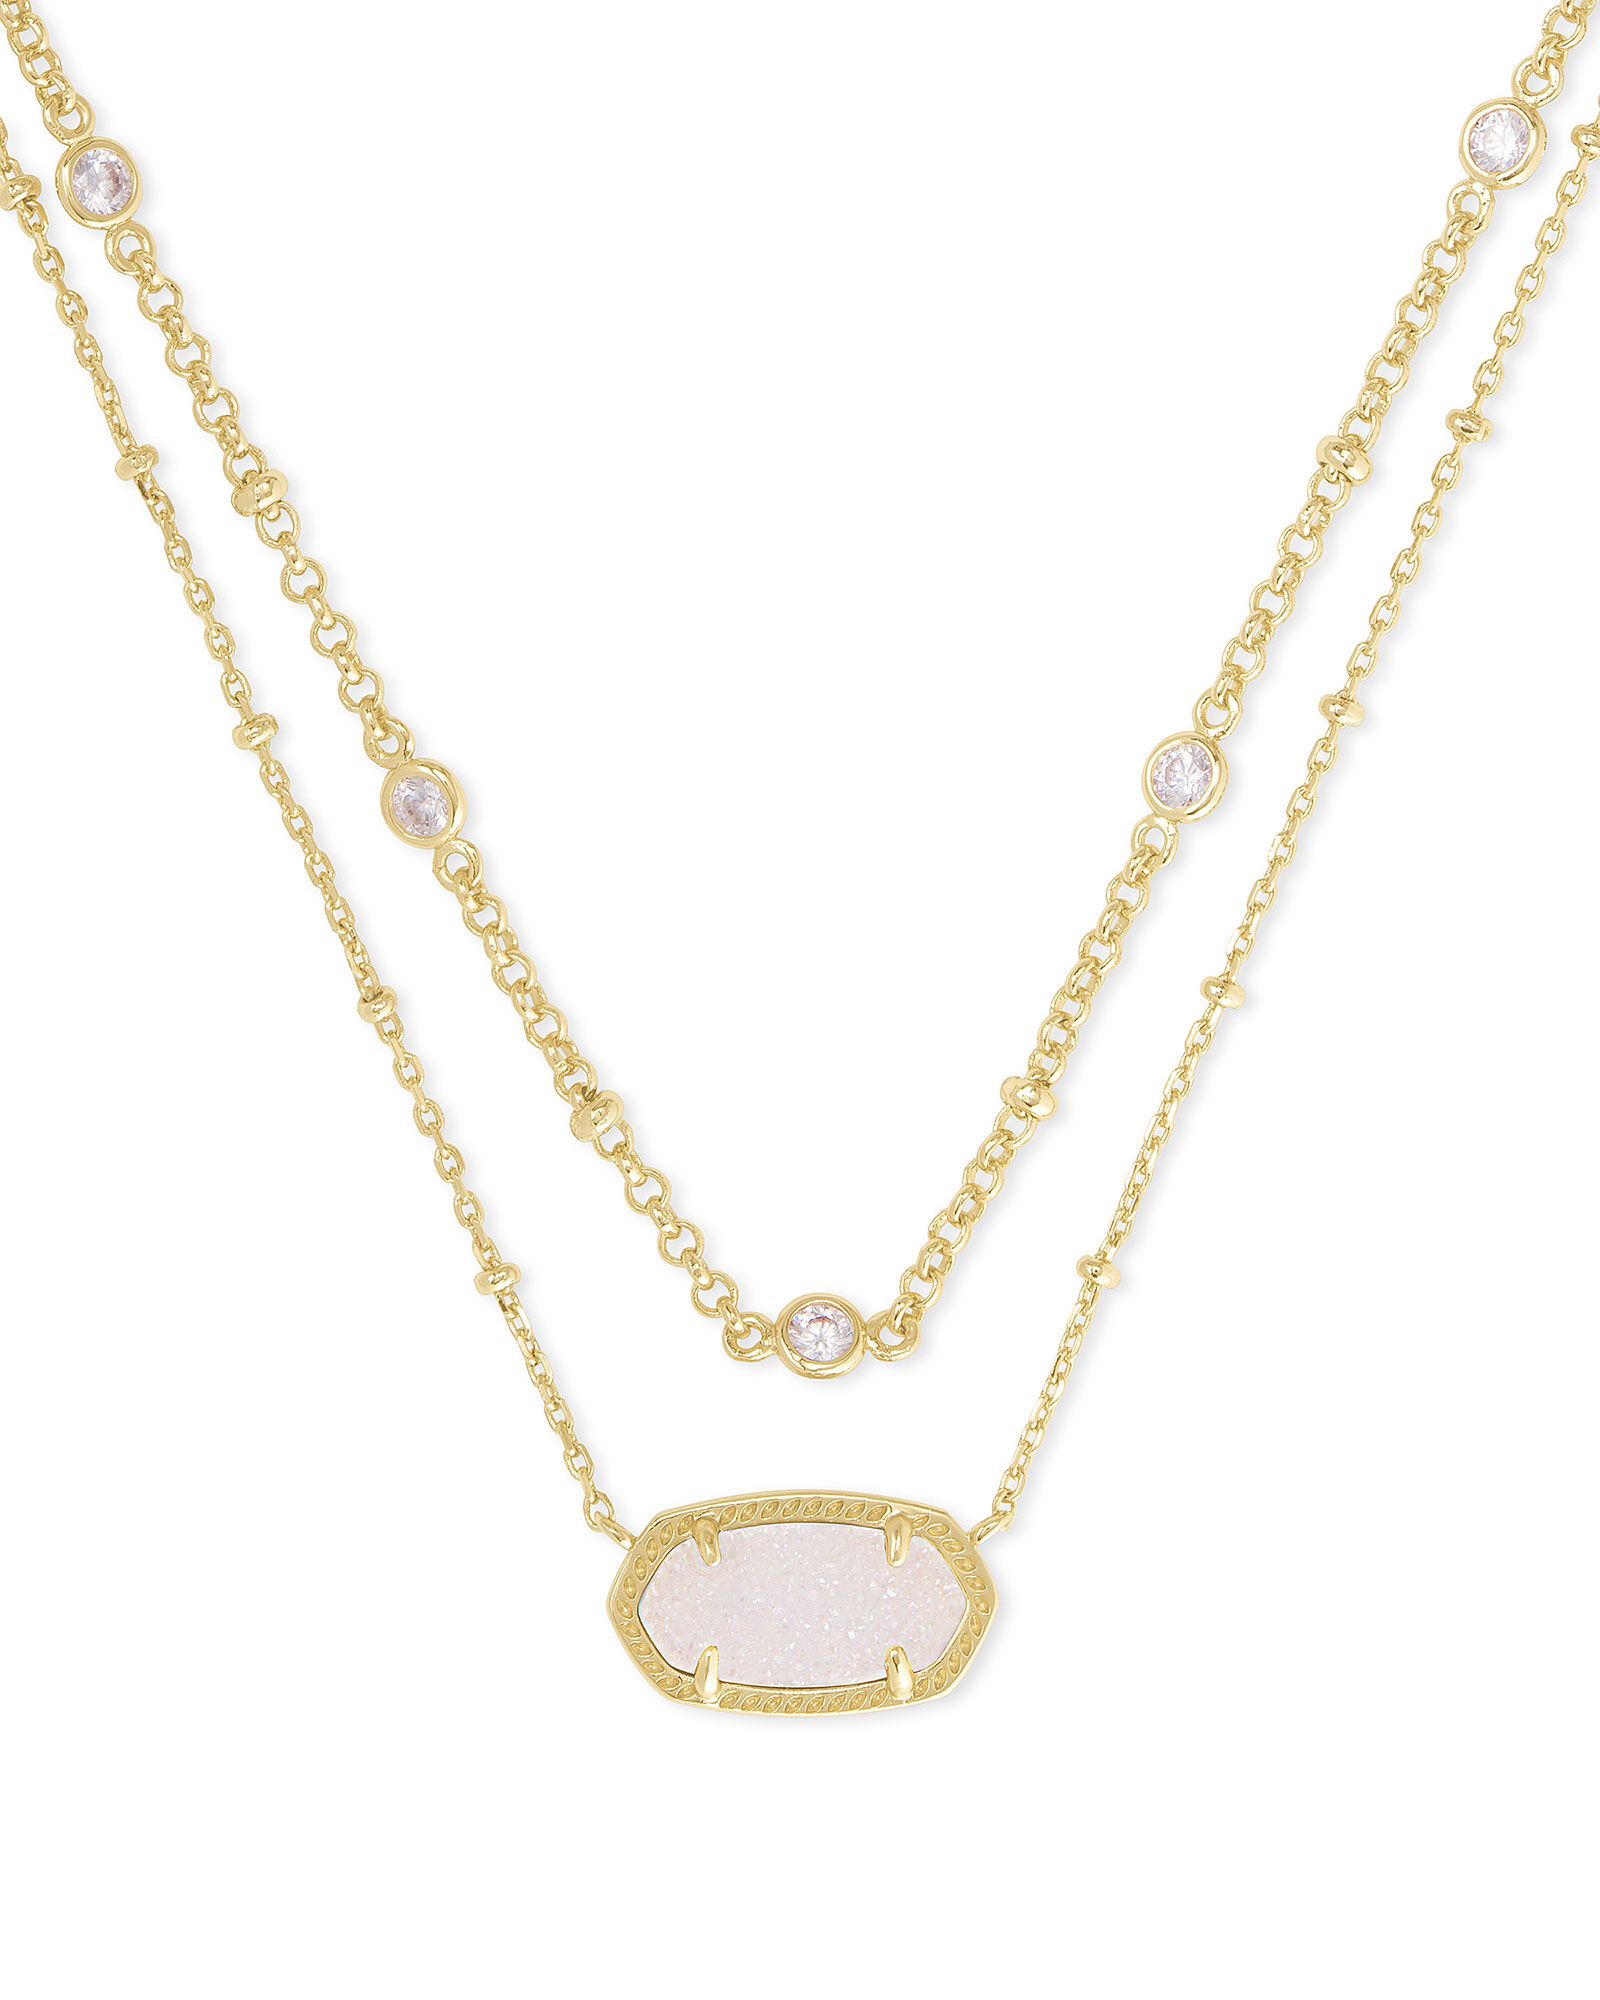 Elisa Gold Multi Strand Necklace in Iridescent Drusy | Kendra Scott | Kendra Scott